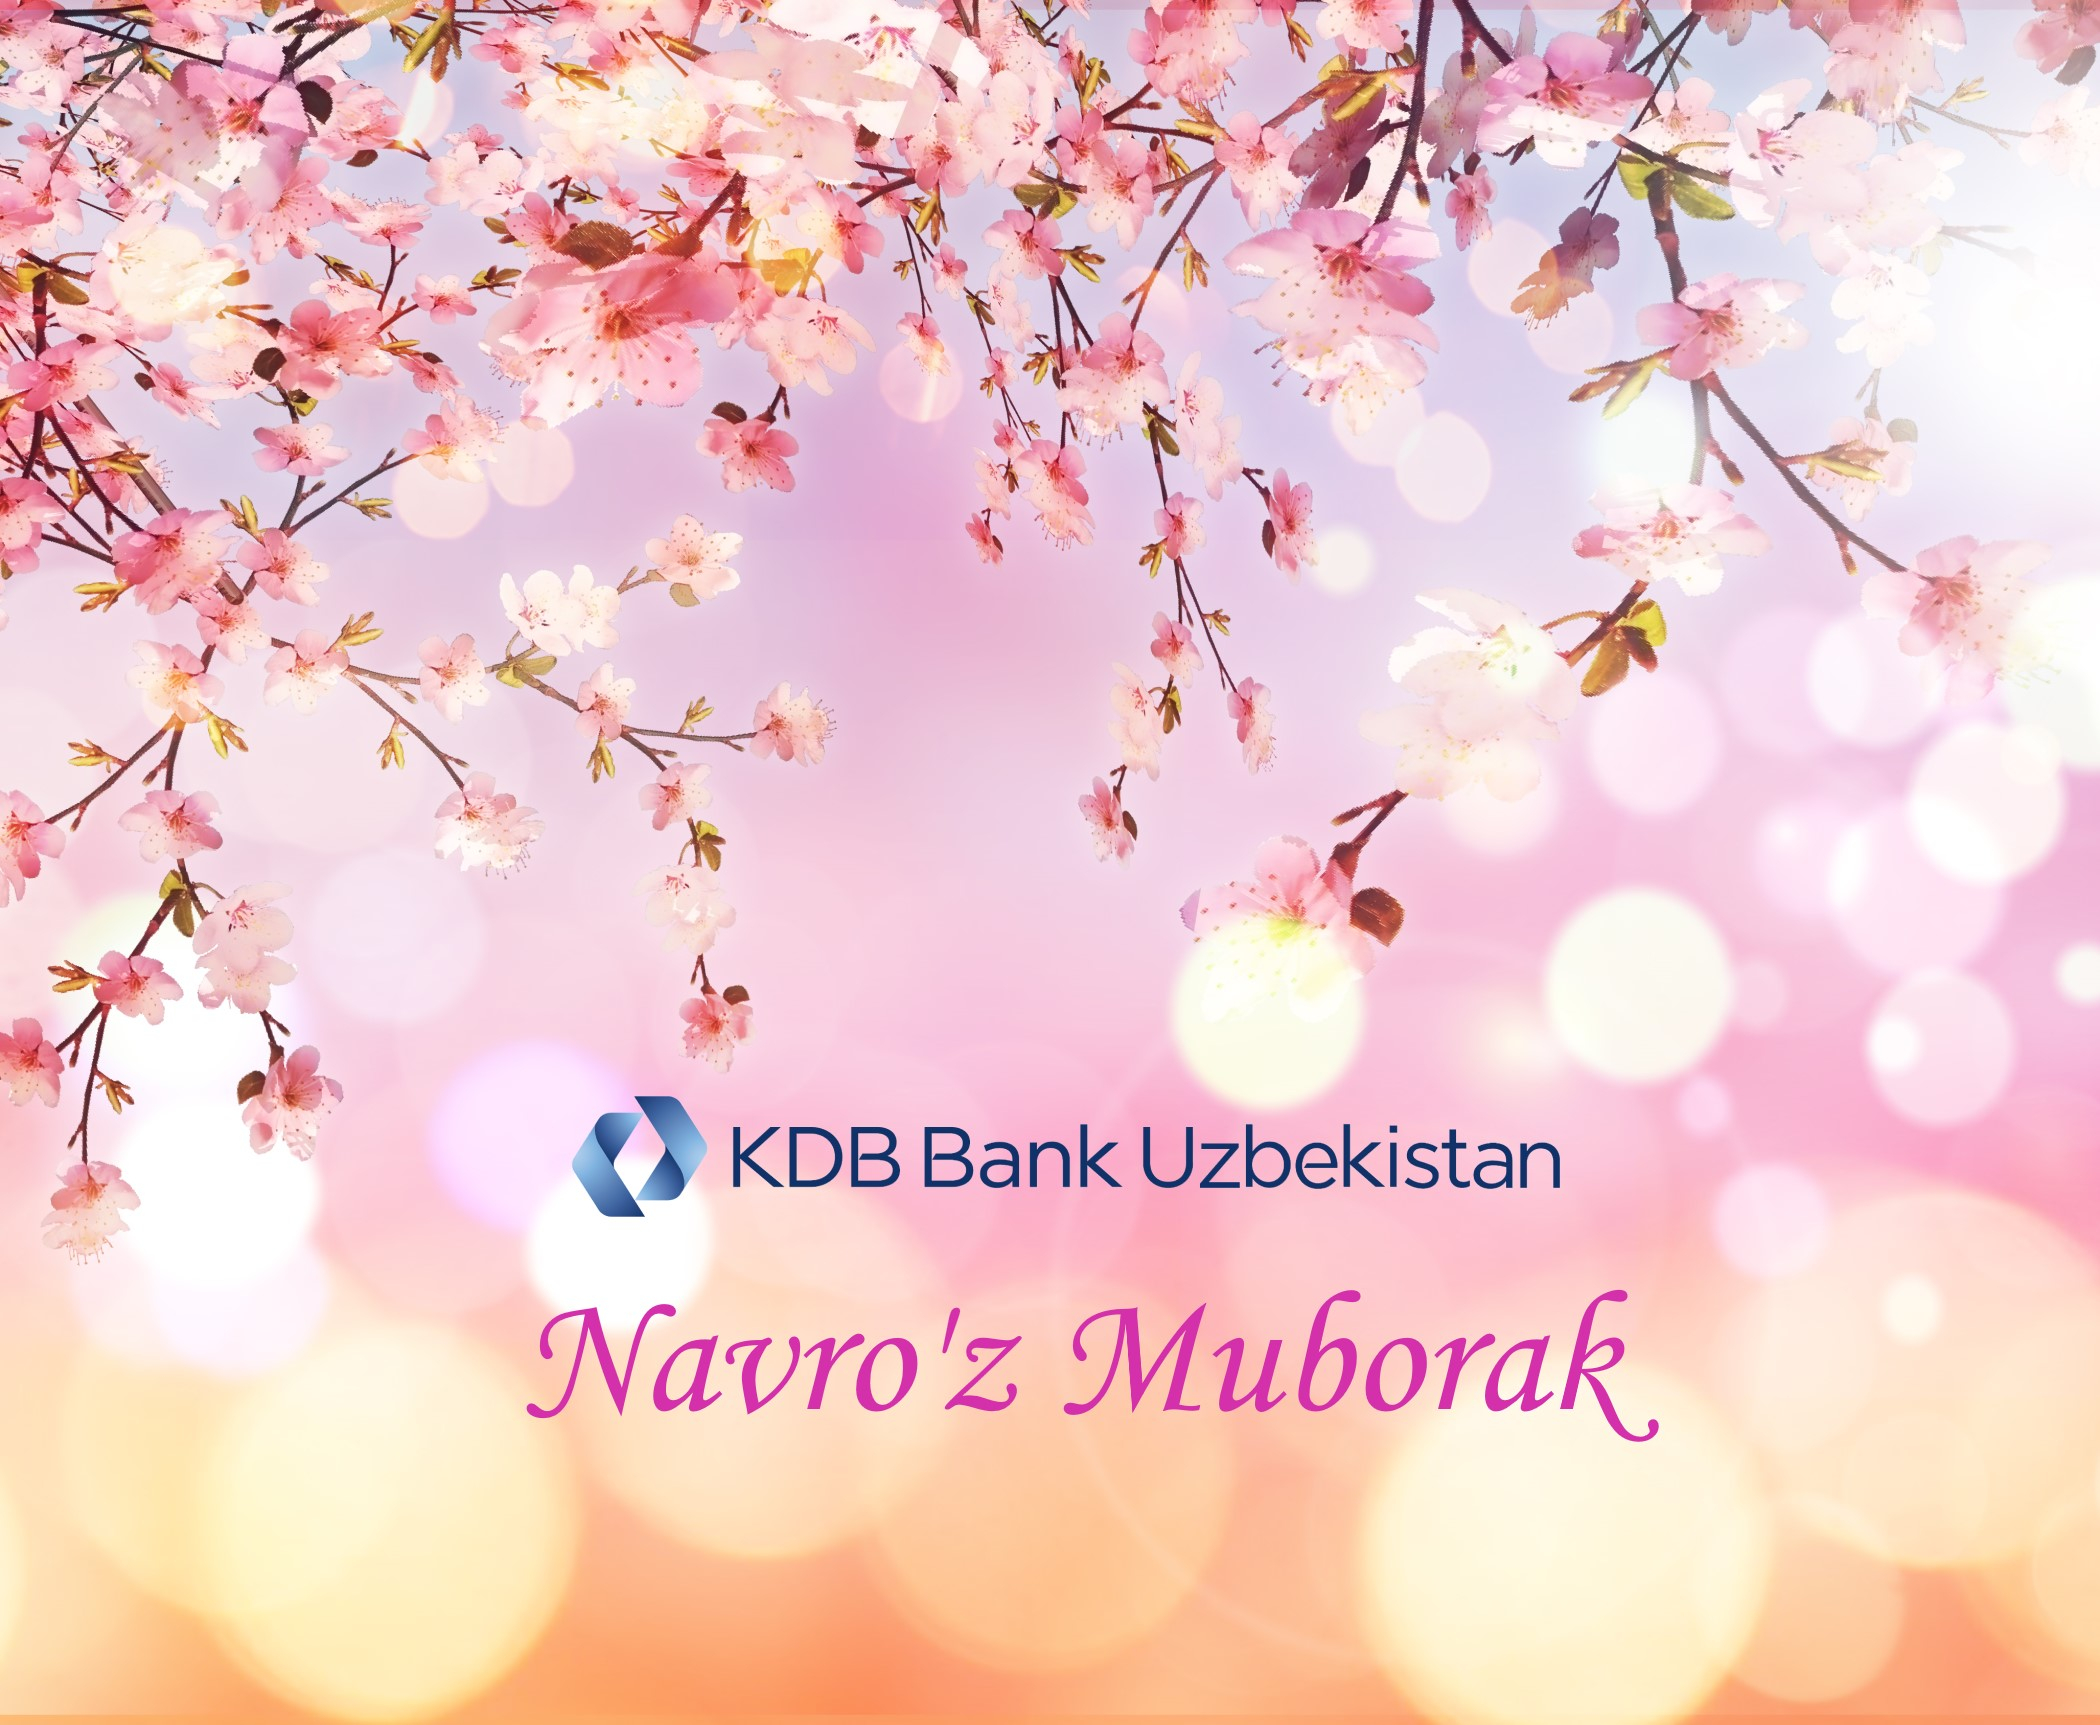 Greeting with Navruz Holiday